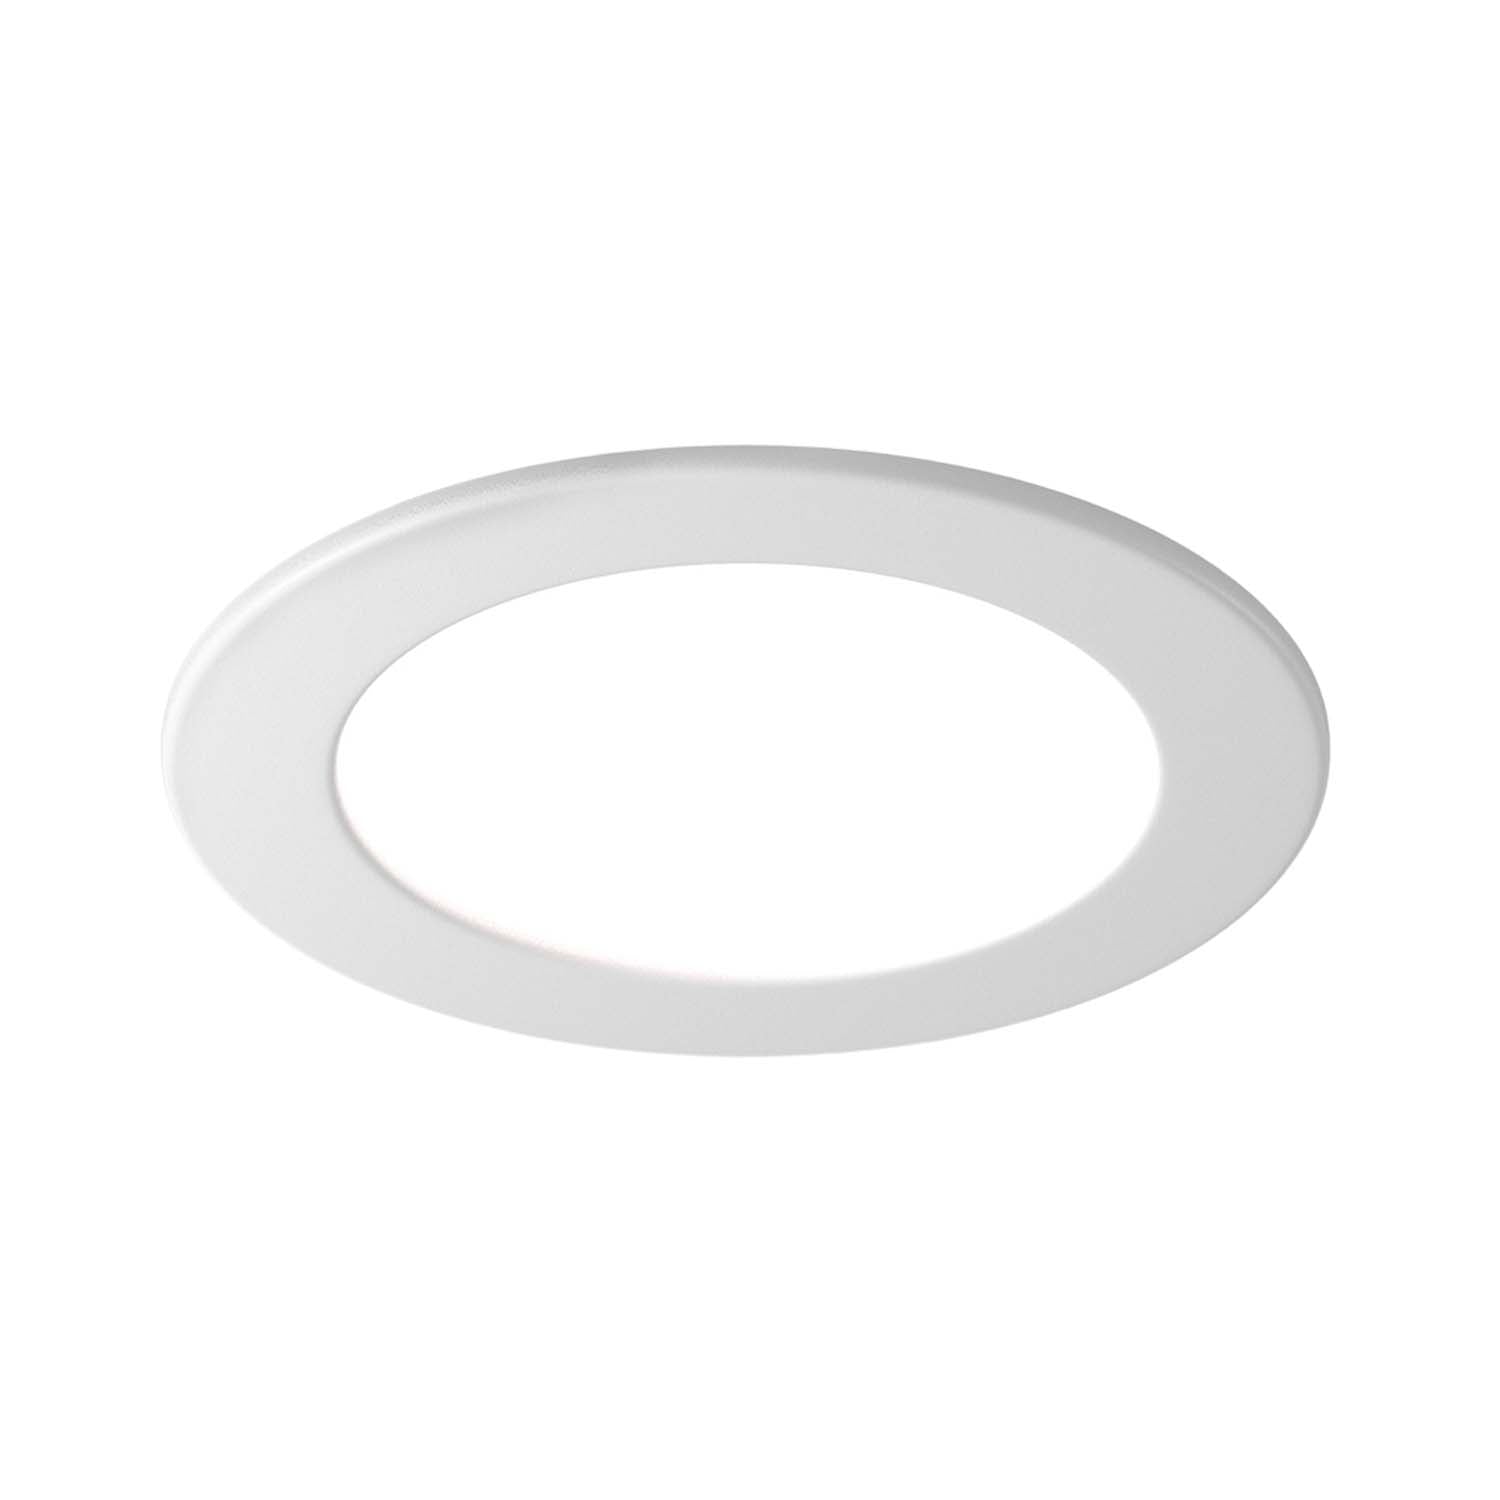 STOCKTON - Large round white recessed spotlight, several diameters